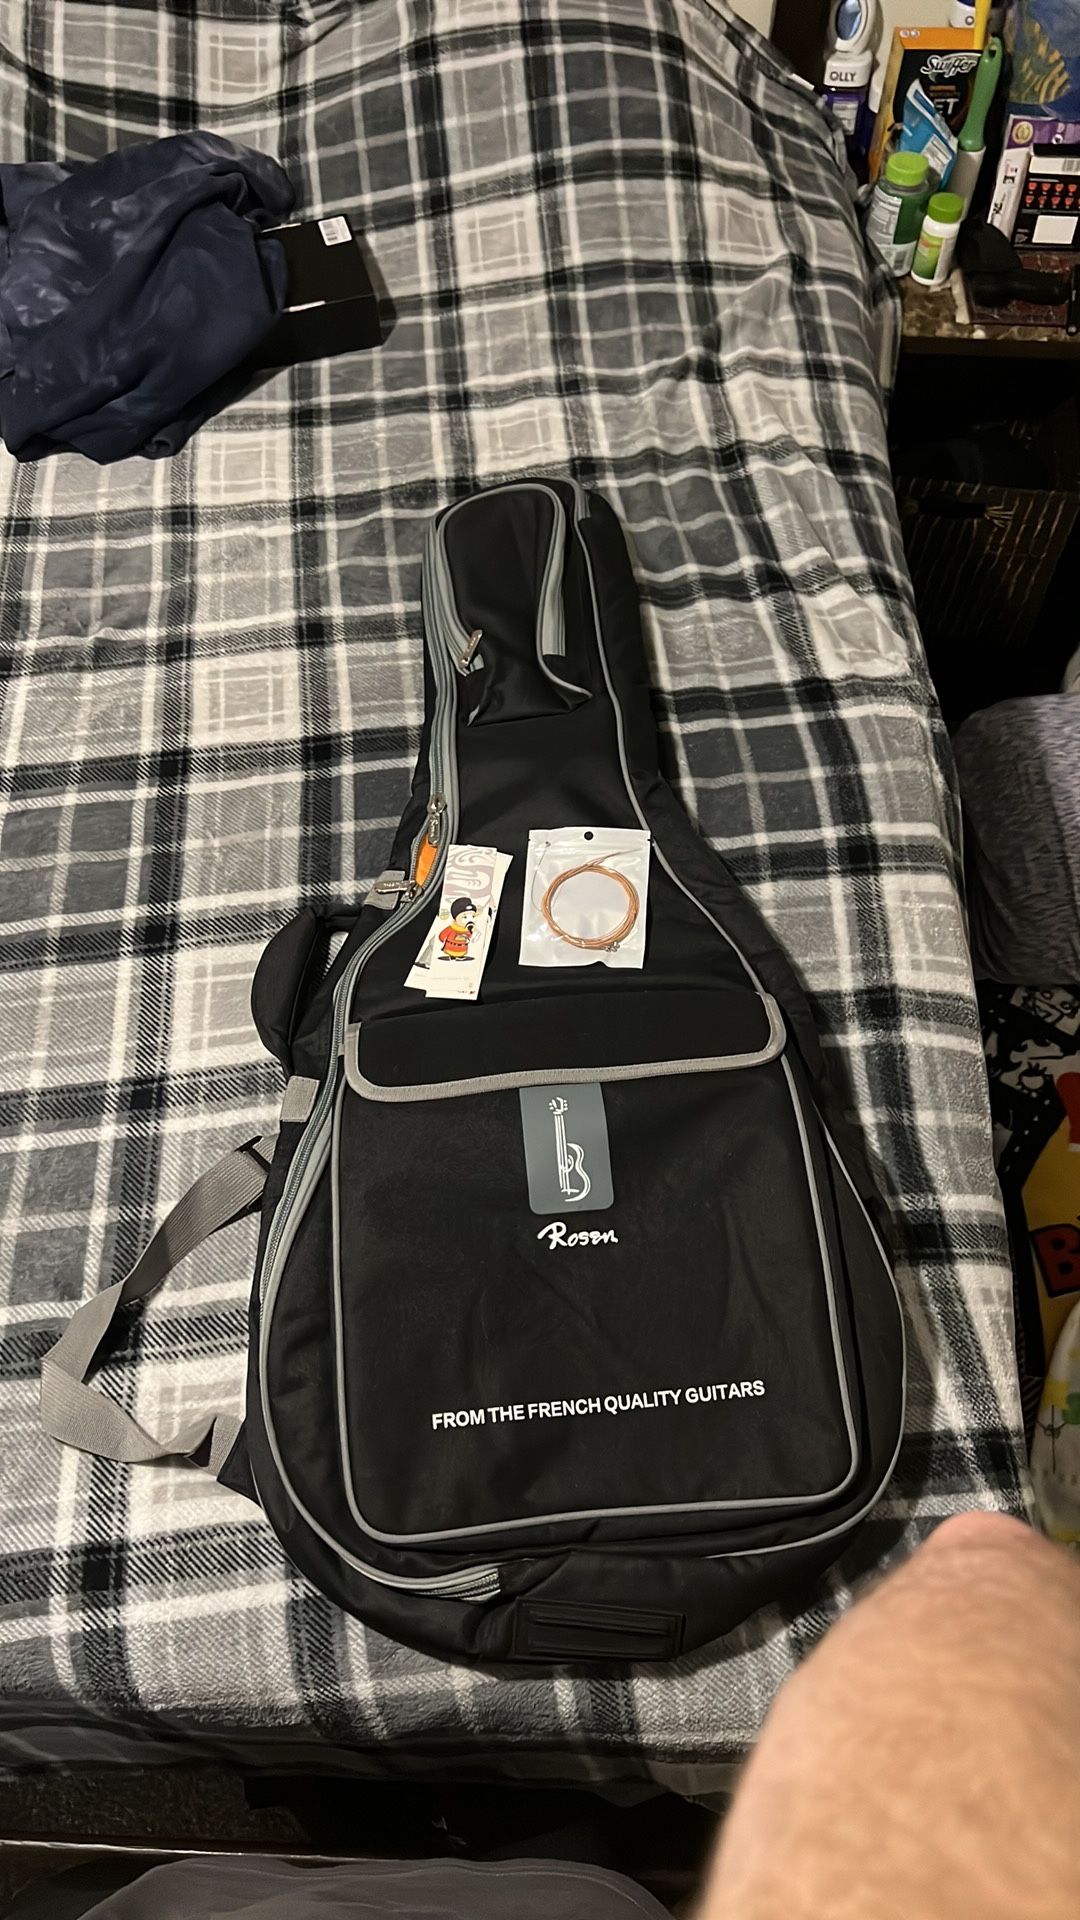 Rosen guitar bag